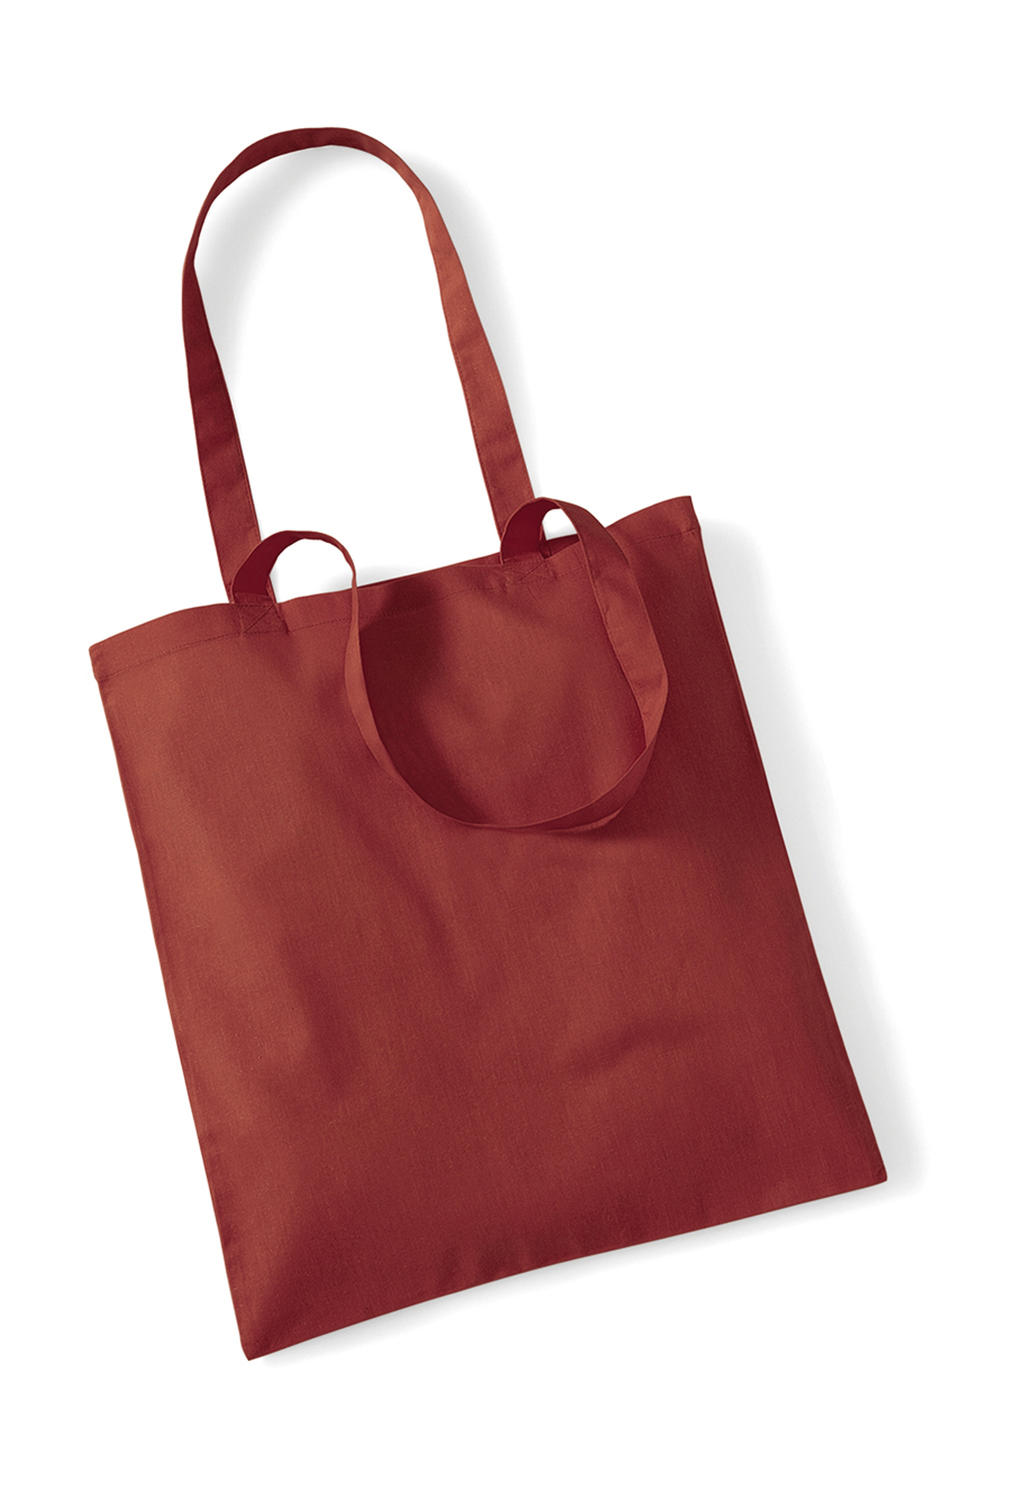  Bag for Life - Long Handles in Farbe Orange Rust